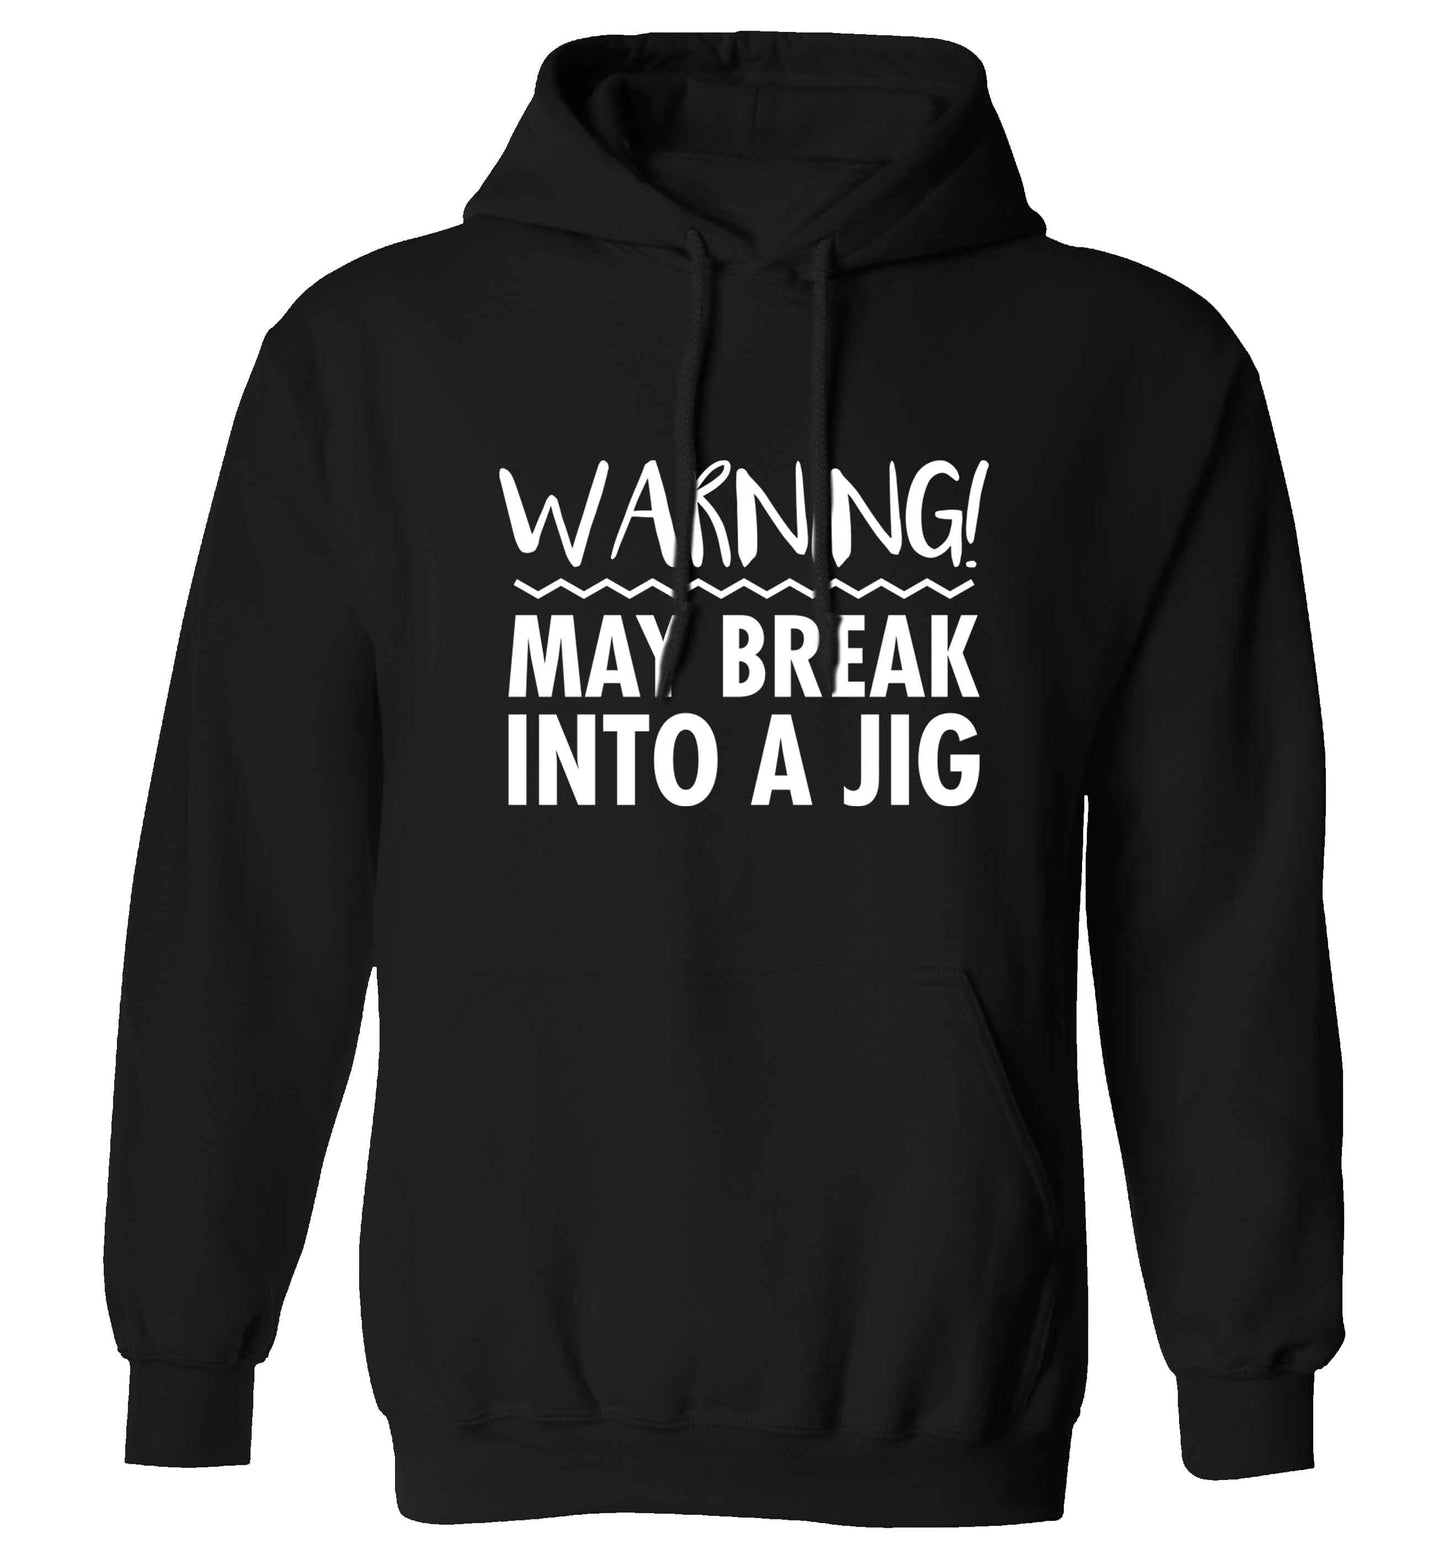 Warning may break into a jig adults unisex black hoodie 2XL